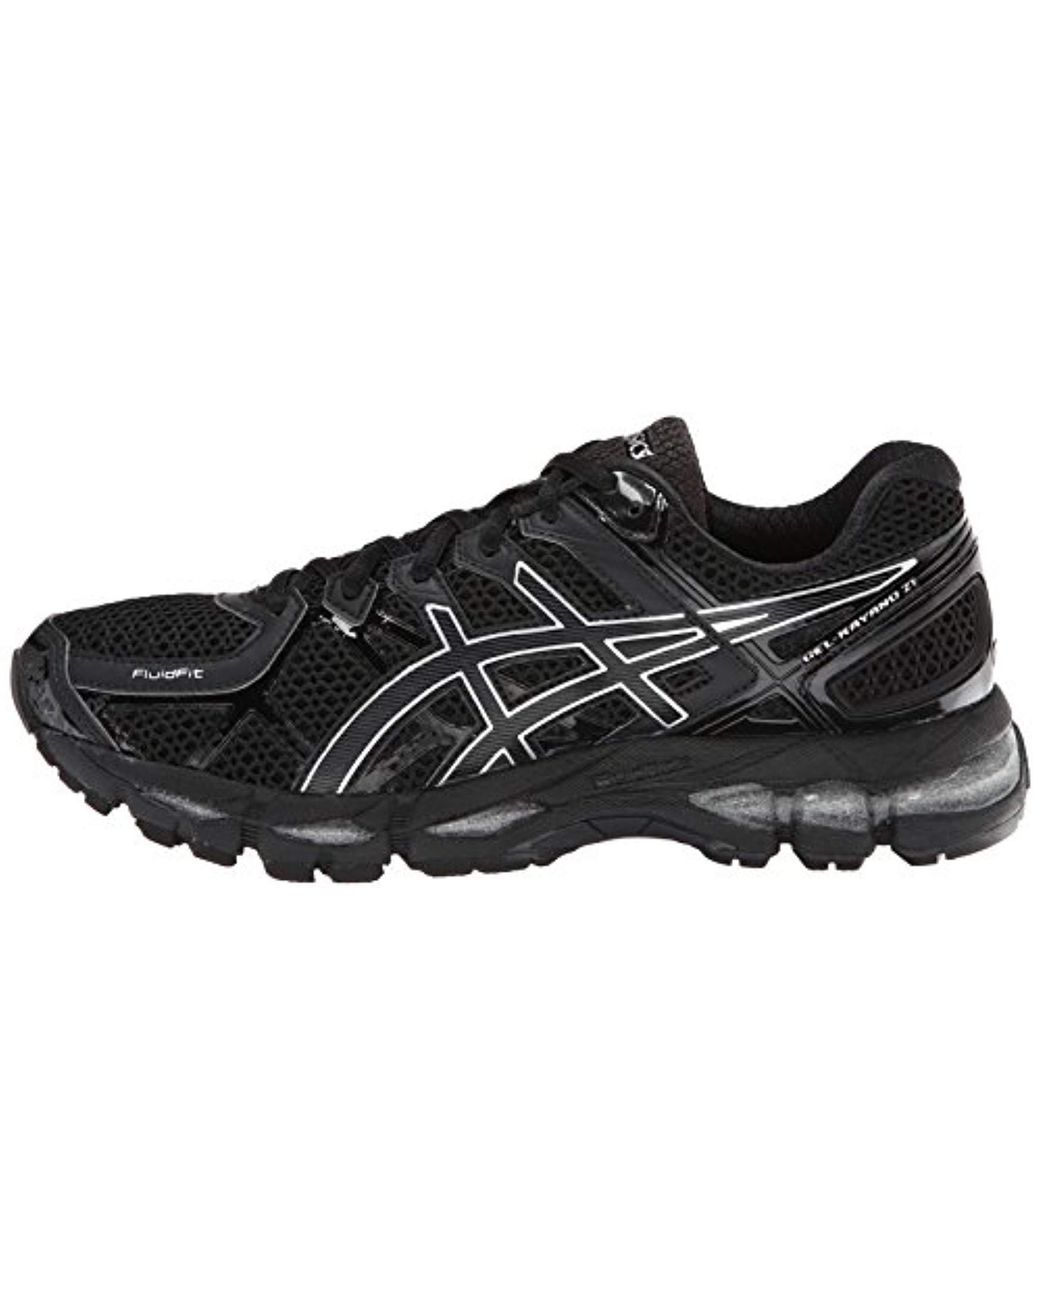 Asics Gel-kayano 21 Running Shoe in Onyx/Black/Silver (Black) | Lyst